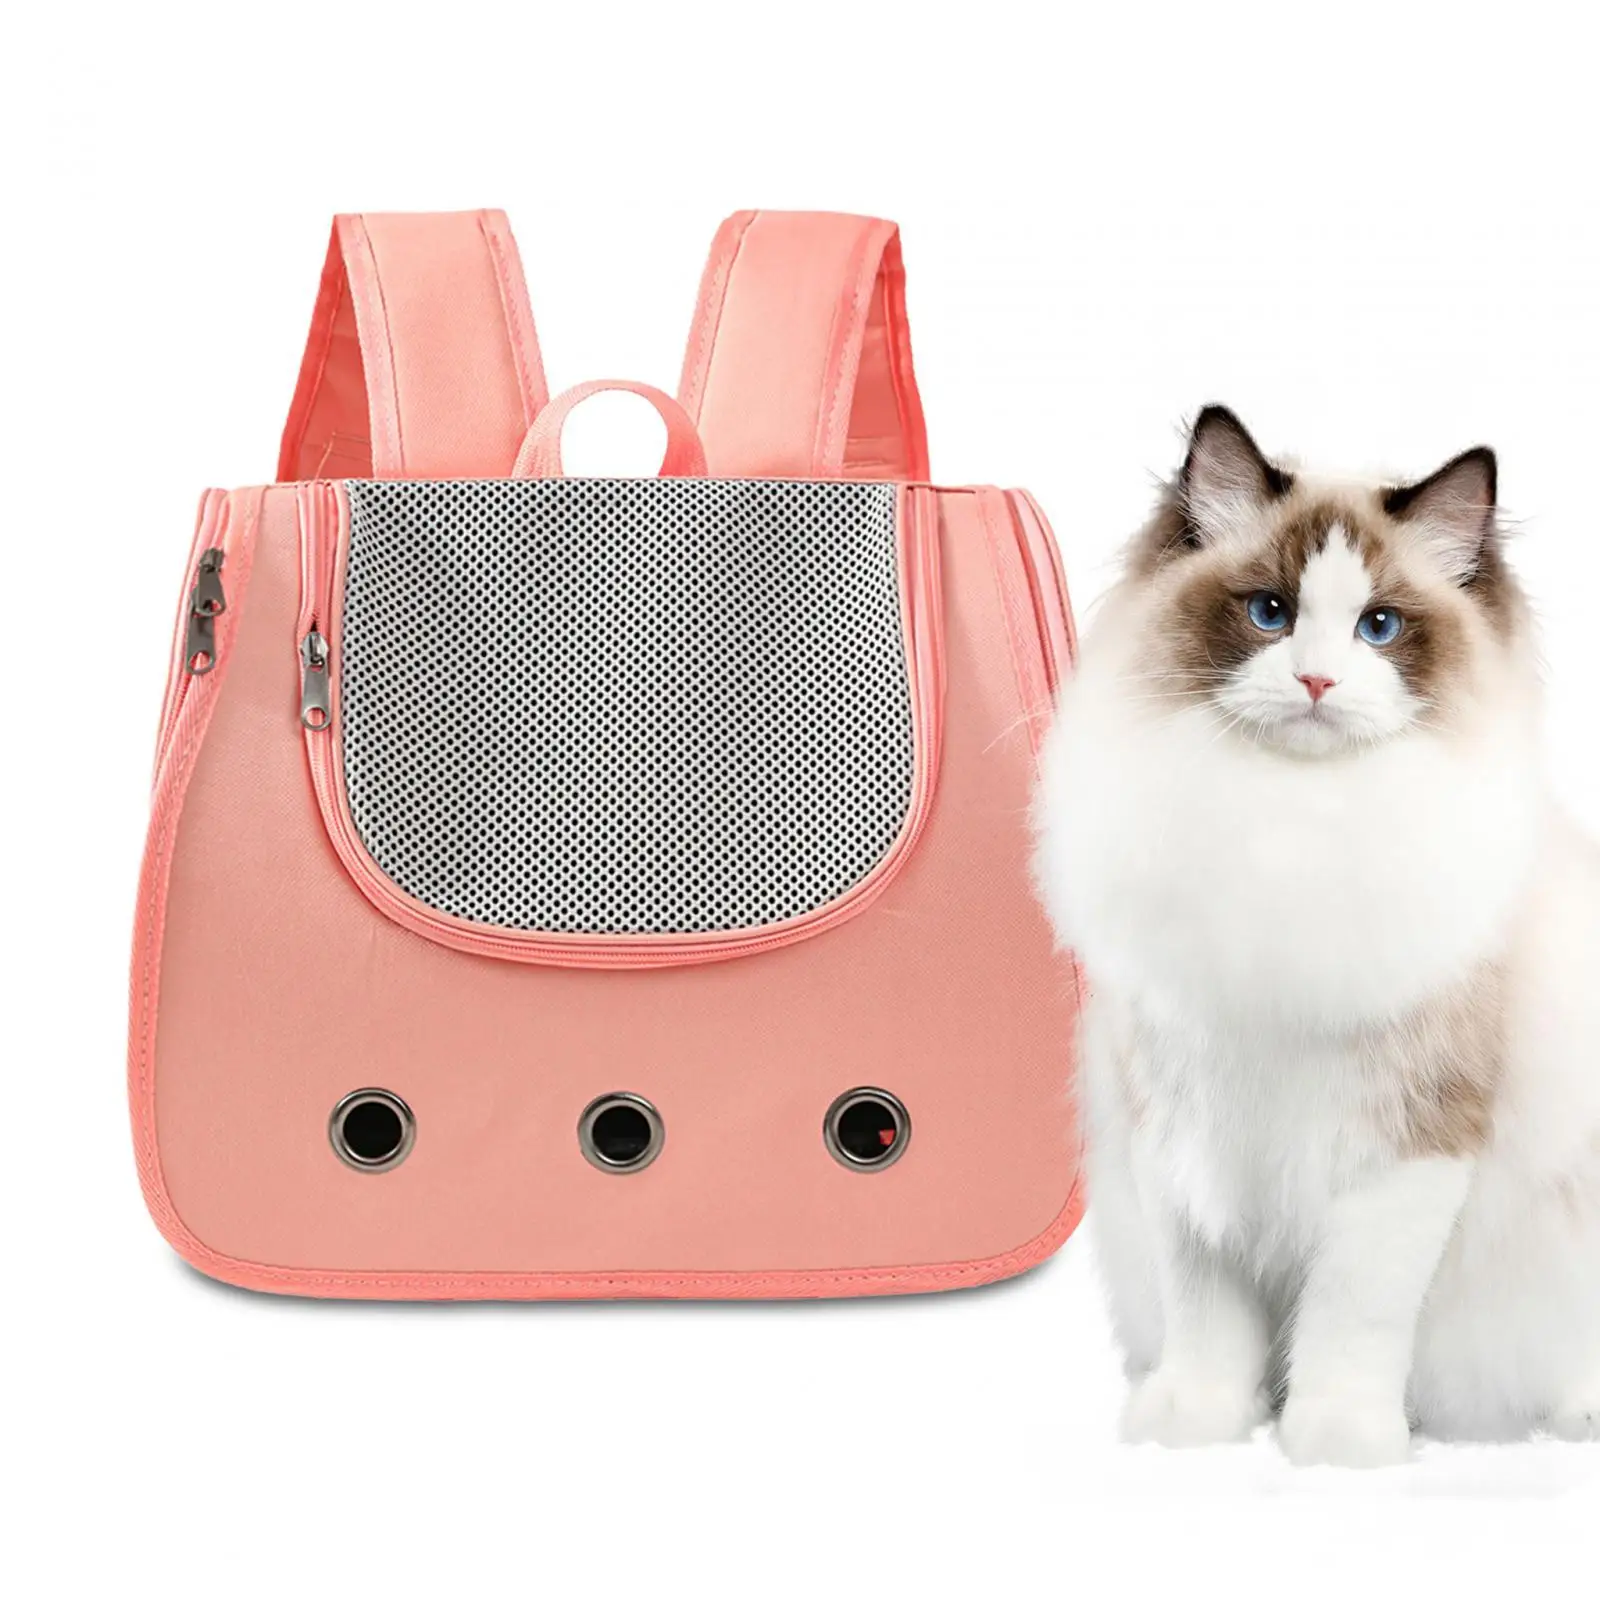 Cat Backpack Carrier Adjustable Strap Handbag Breathable Mesh Pet Travel Backpack for Camping Walking Outdoor Hiking Traveling